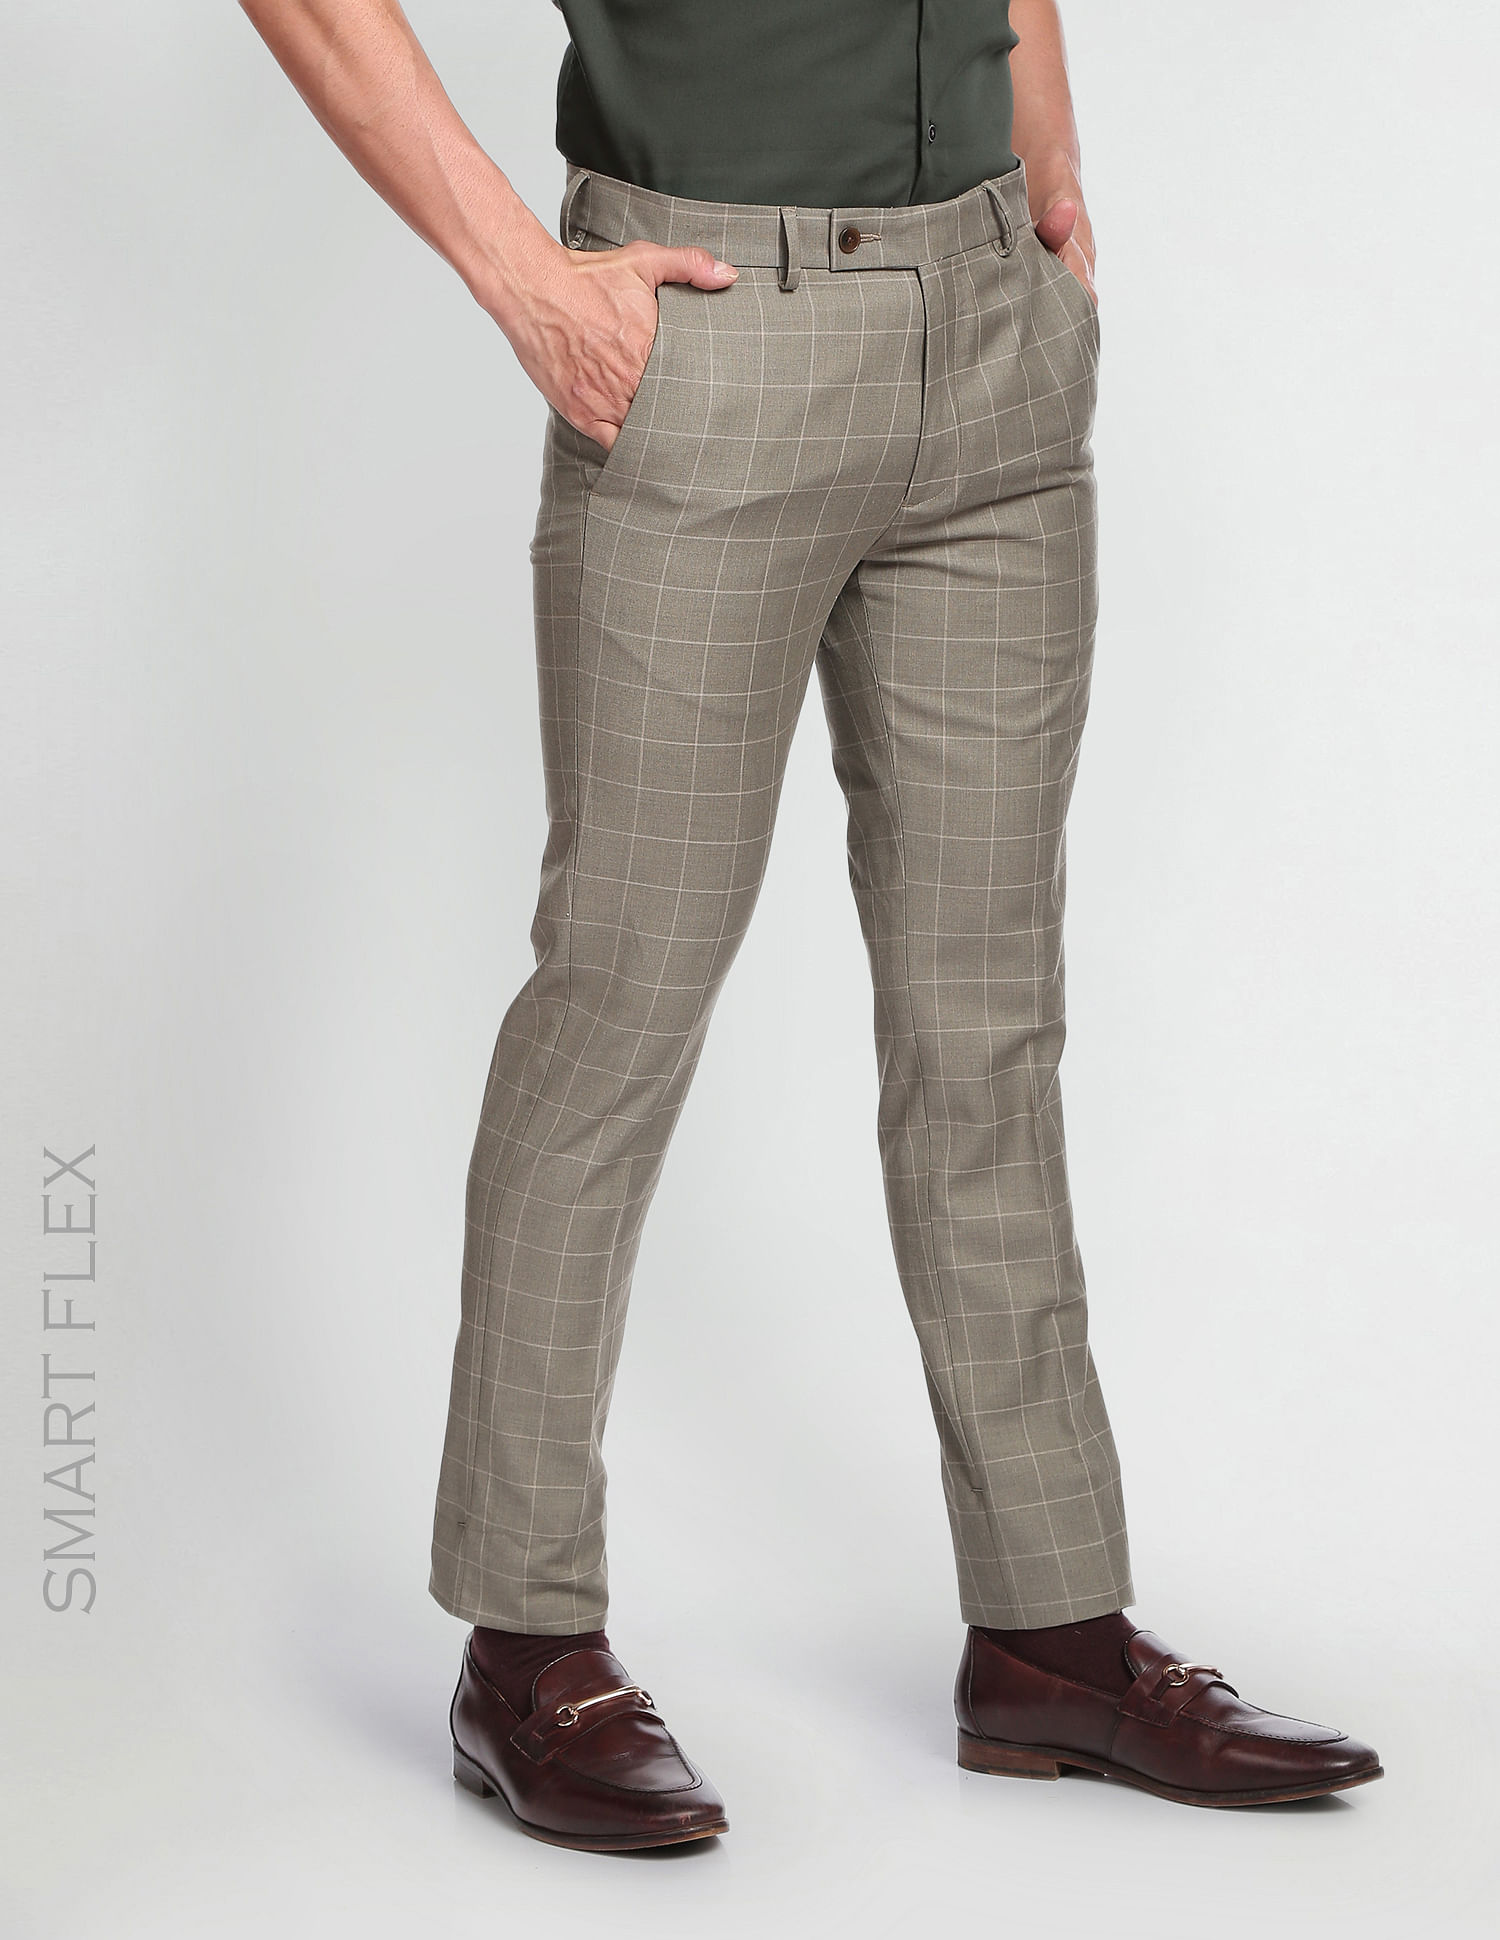 Buy Arrow Patterned Twill Check Auto Flex Grey Trouser online